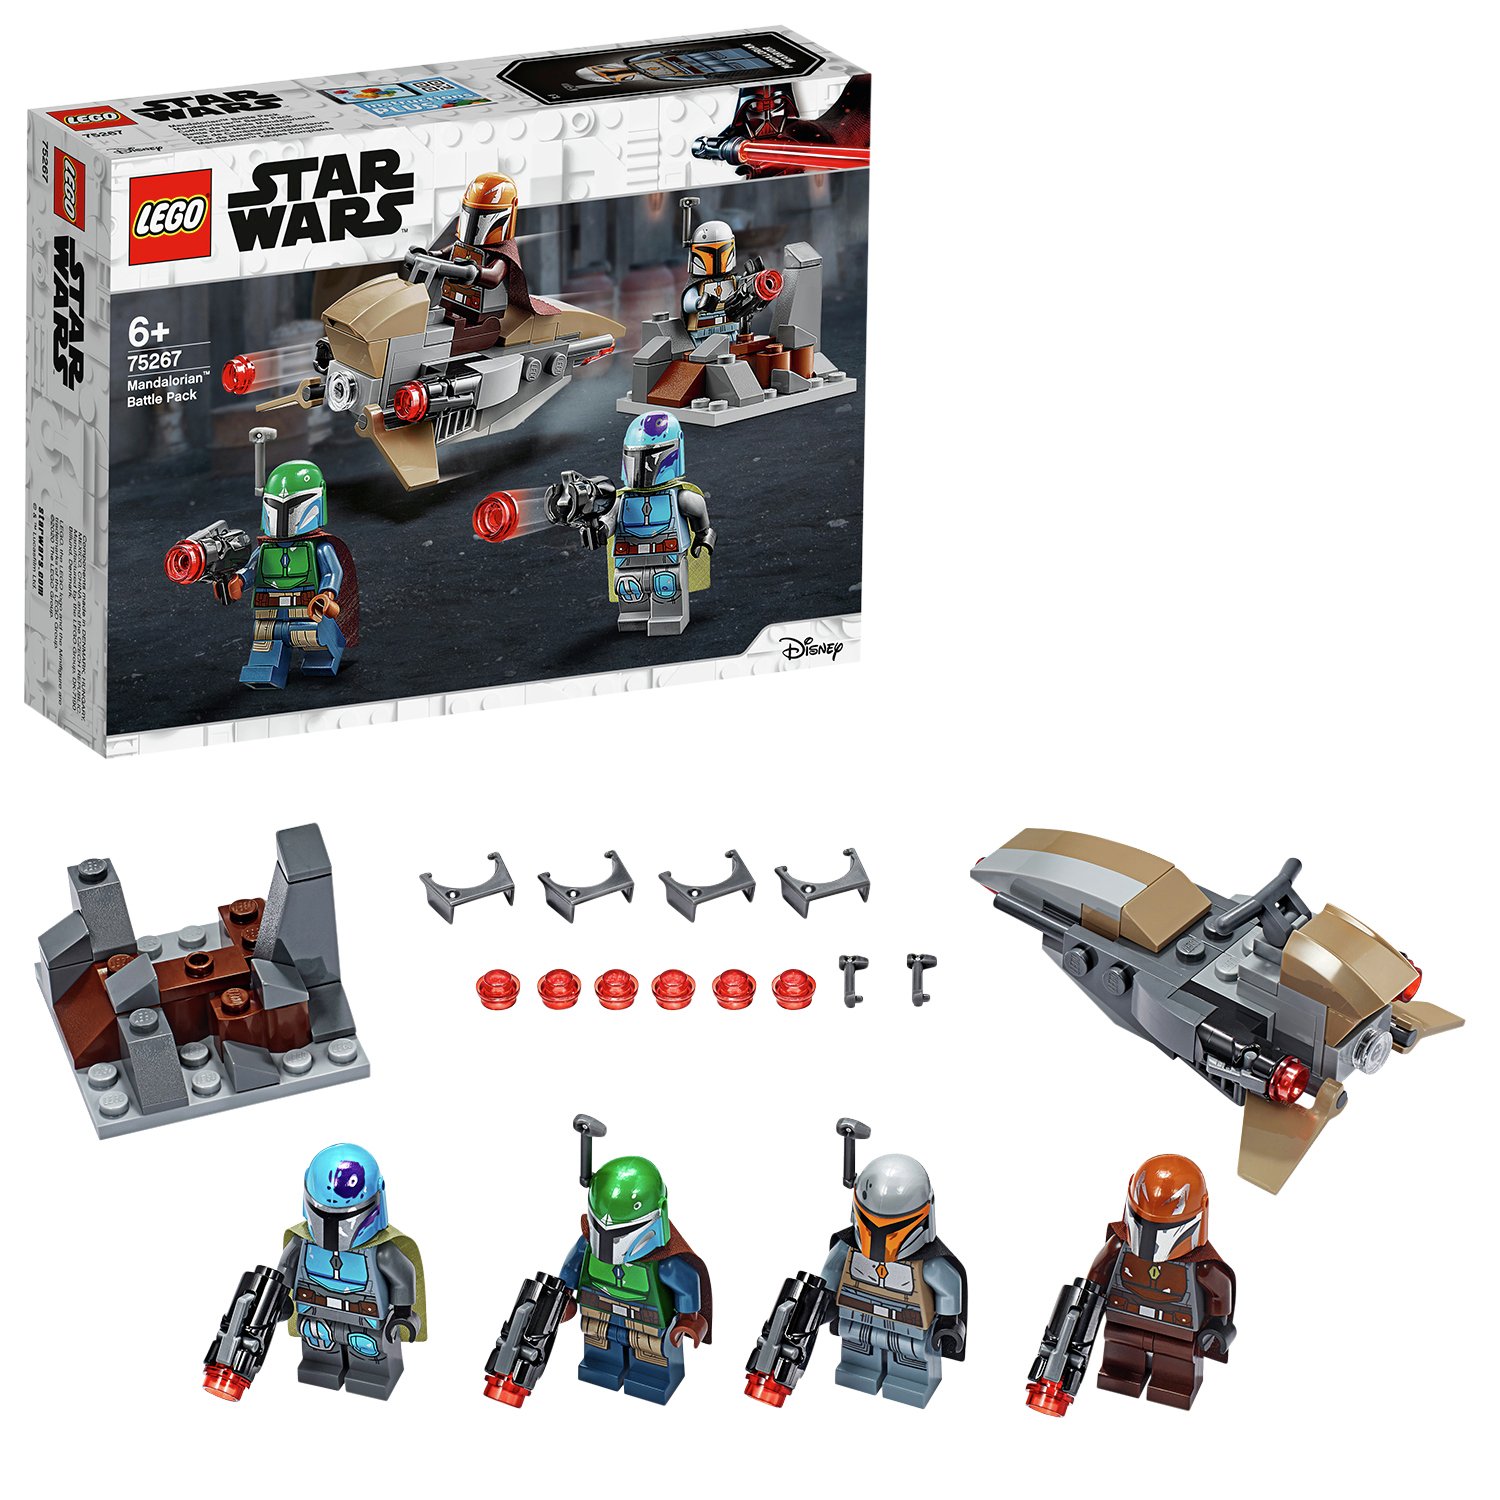 LEGO Star Wars Mandalorian Battle Pack Building Set Review